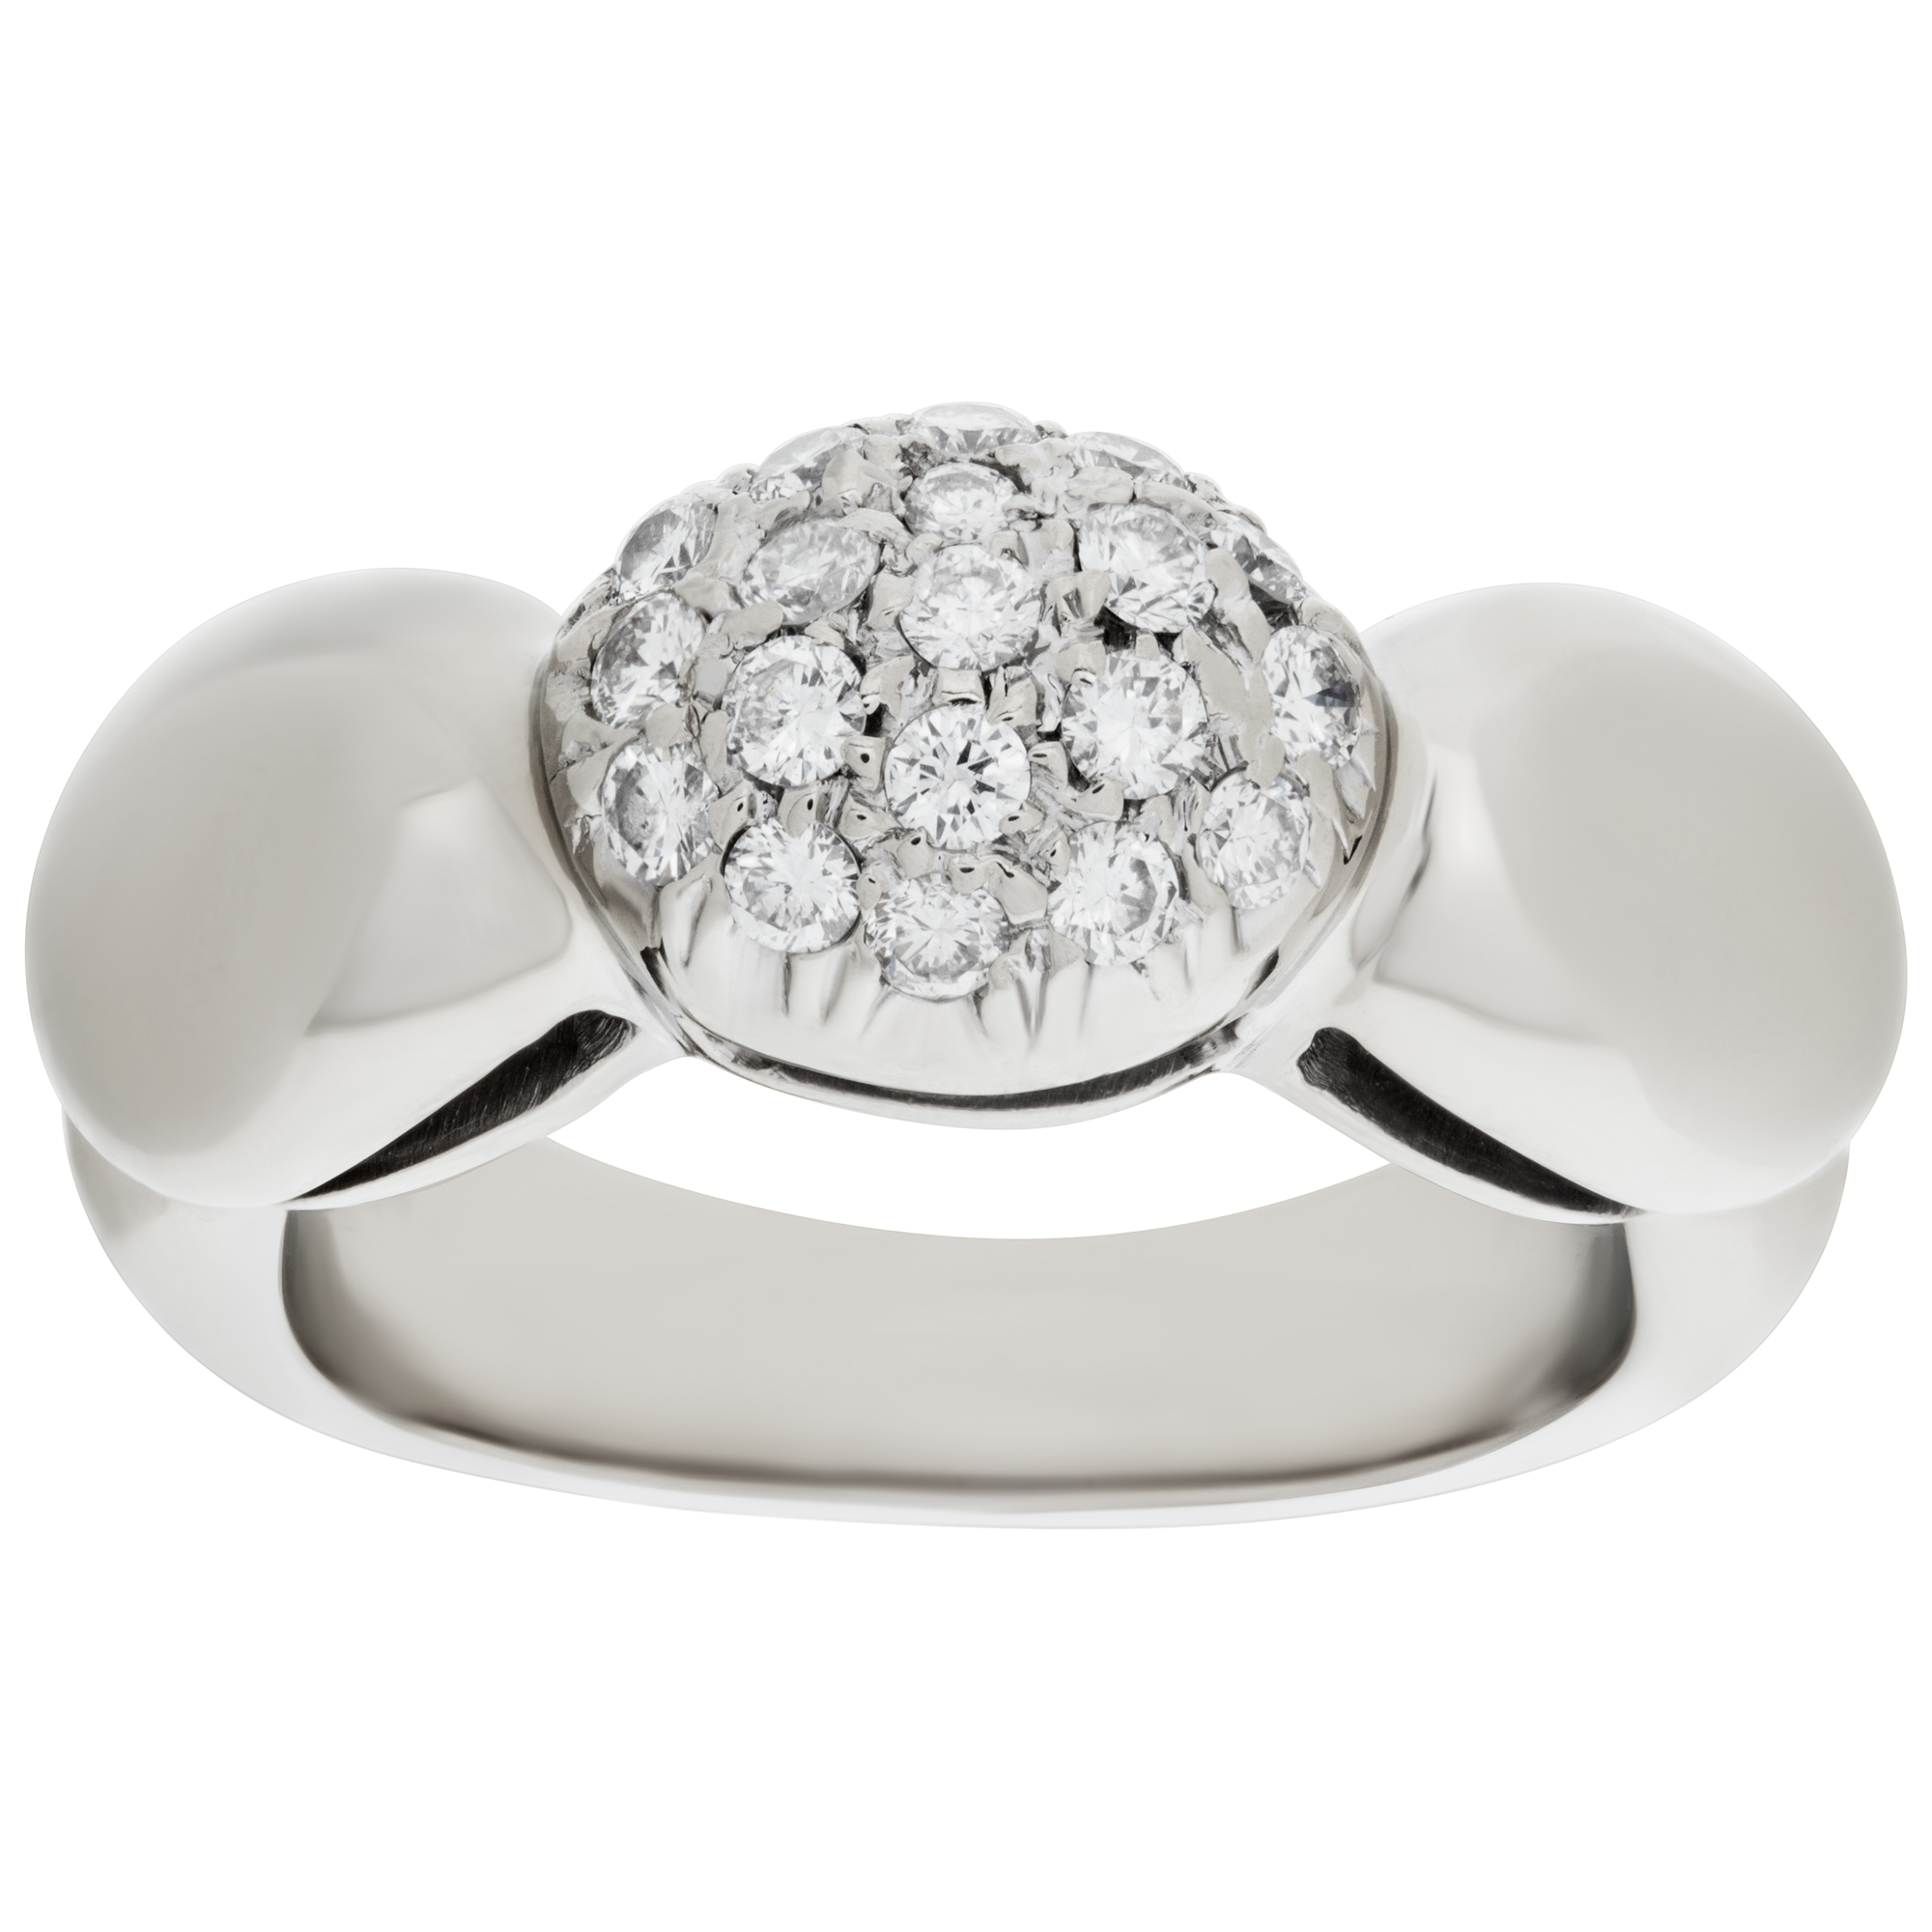 Domed diamond ring in 18k white gold